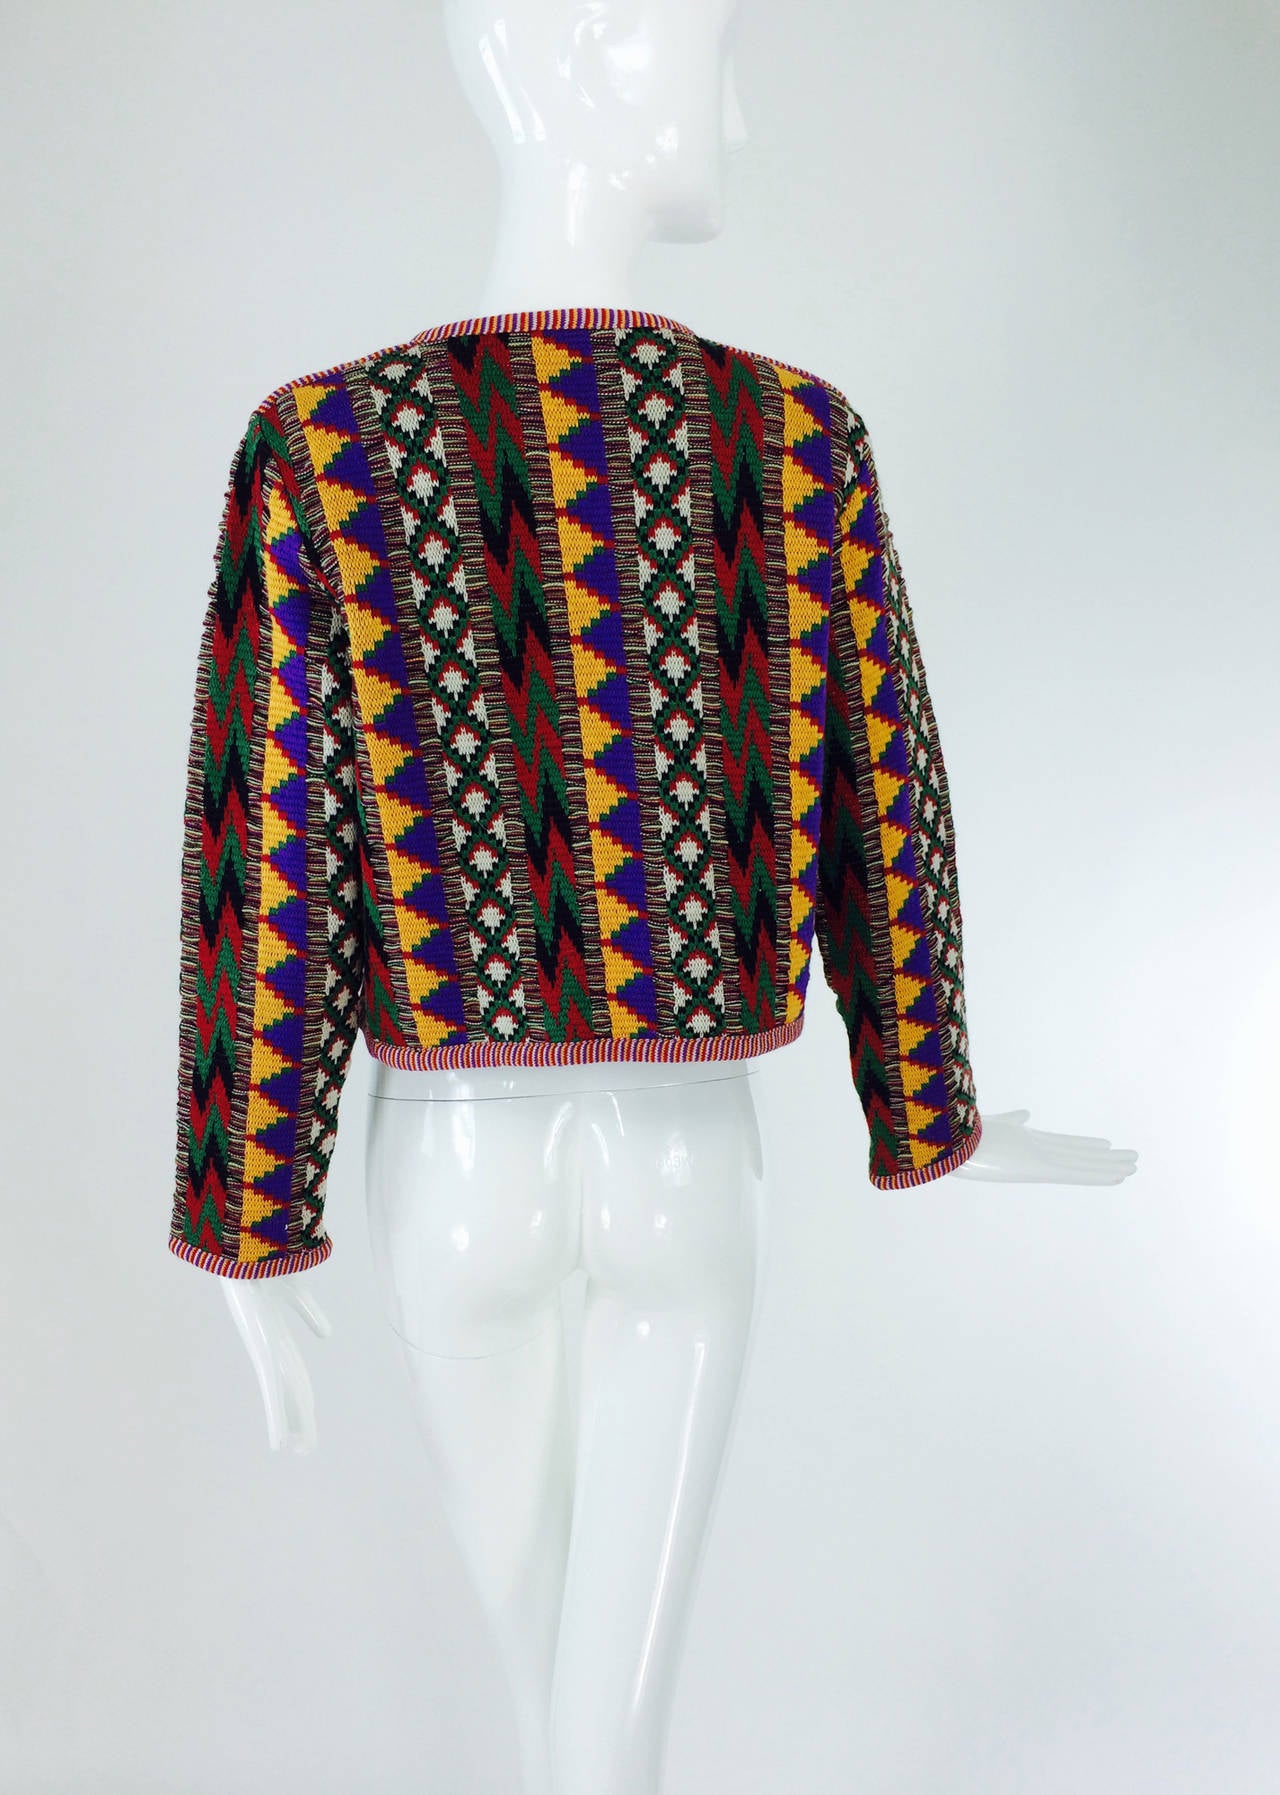 Yves St Laurent YSL Rive Gauche geometric tribal knit sweater 1970s 2